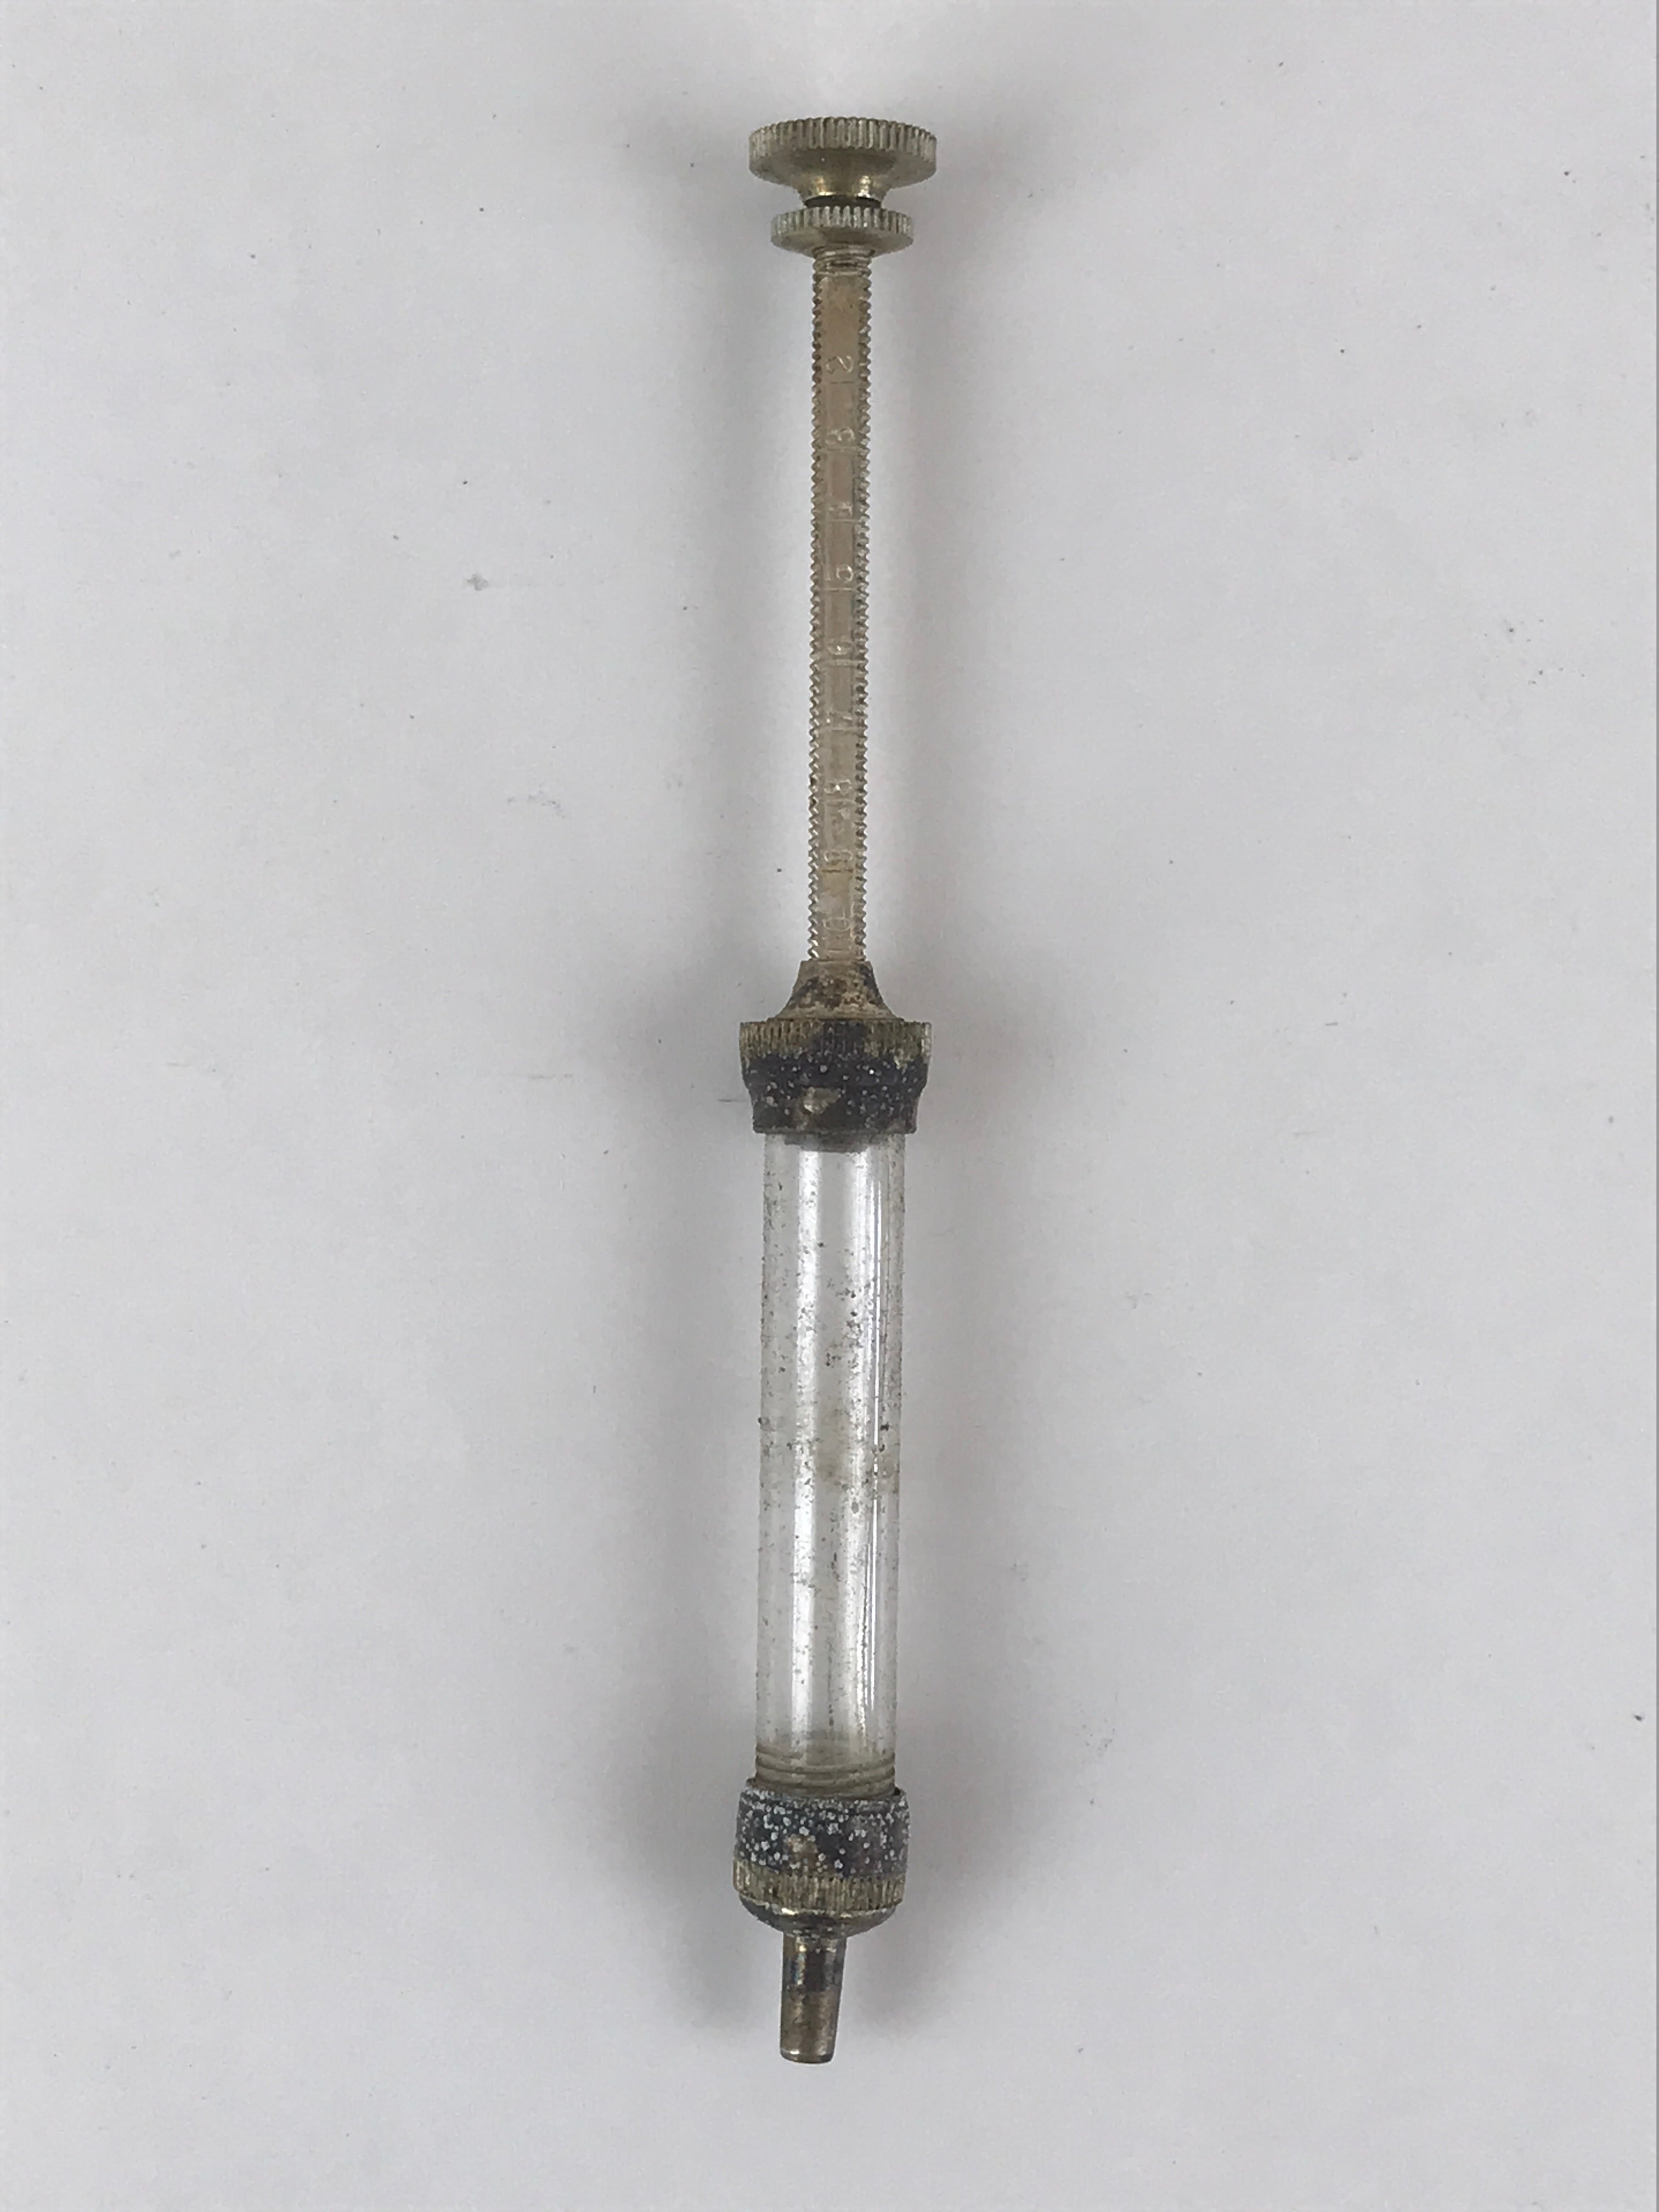 Japanese Metal Frame Small Syringe with Case Vtg Experiment Military Medical JK4